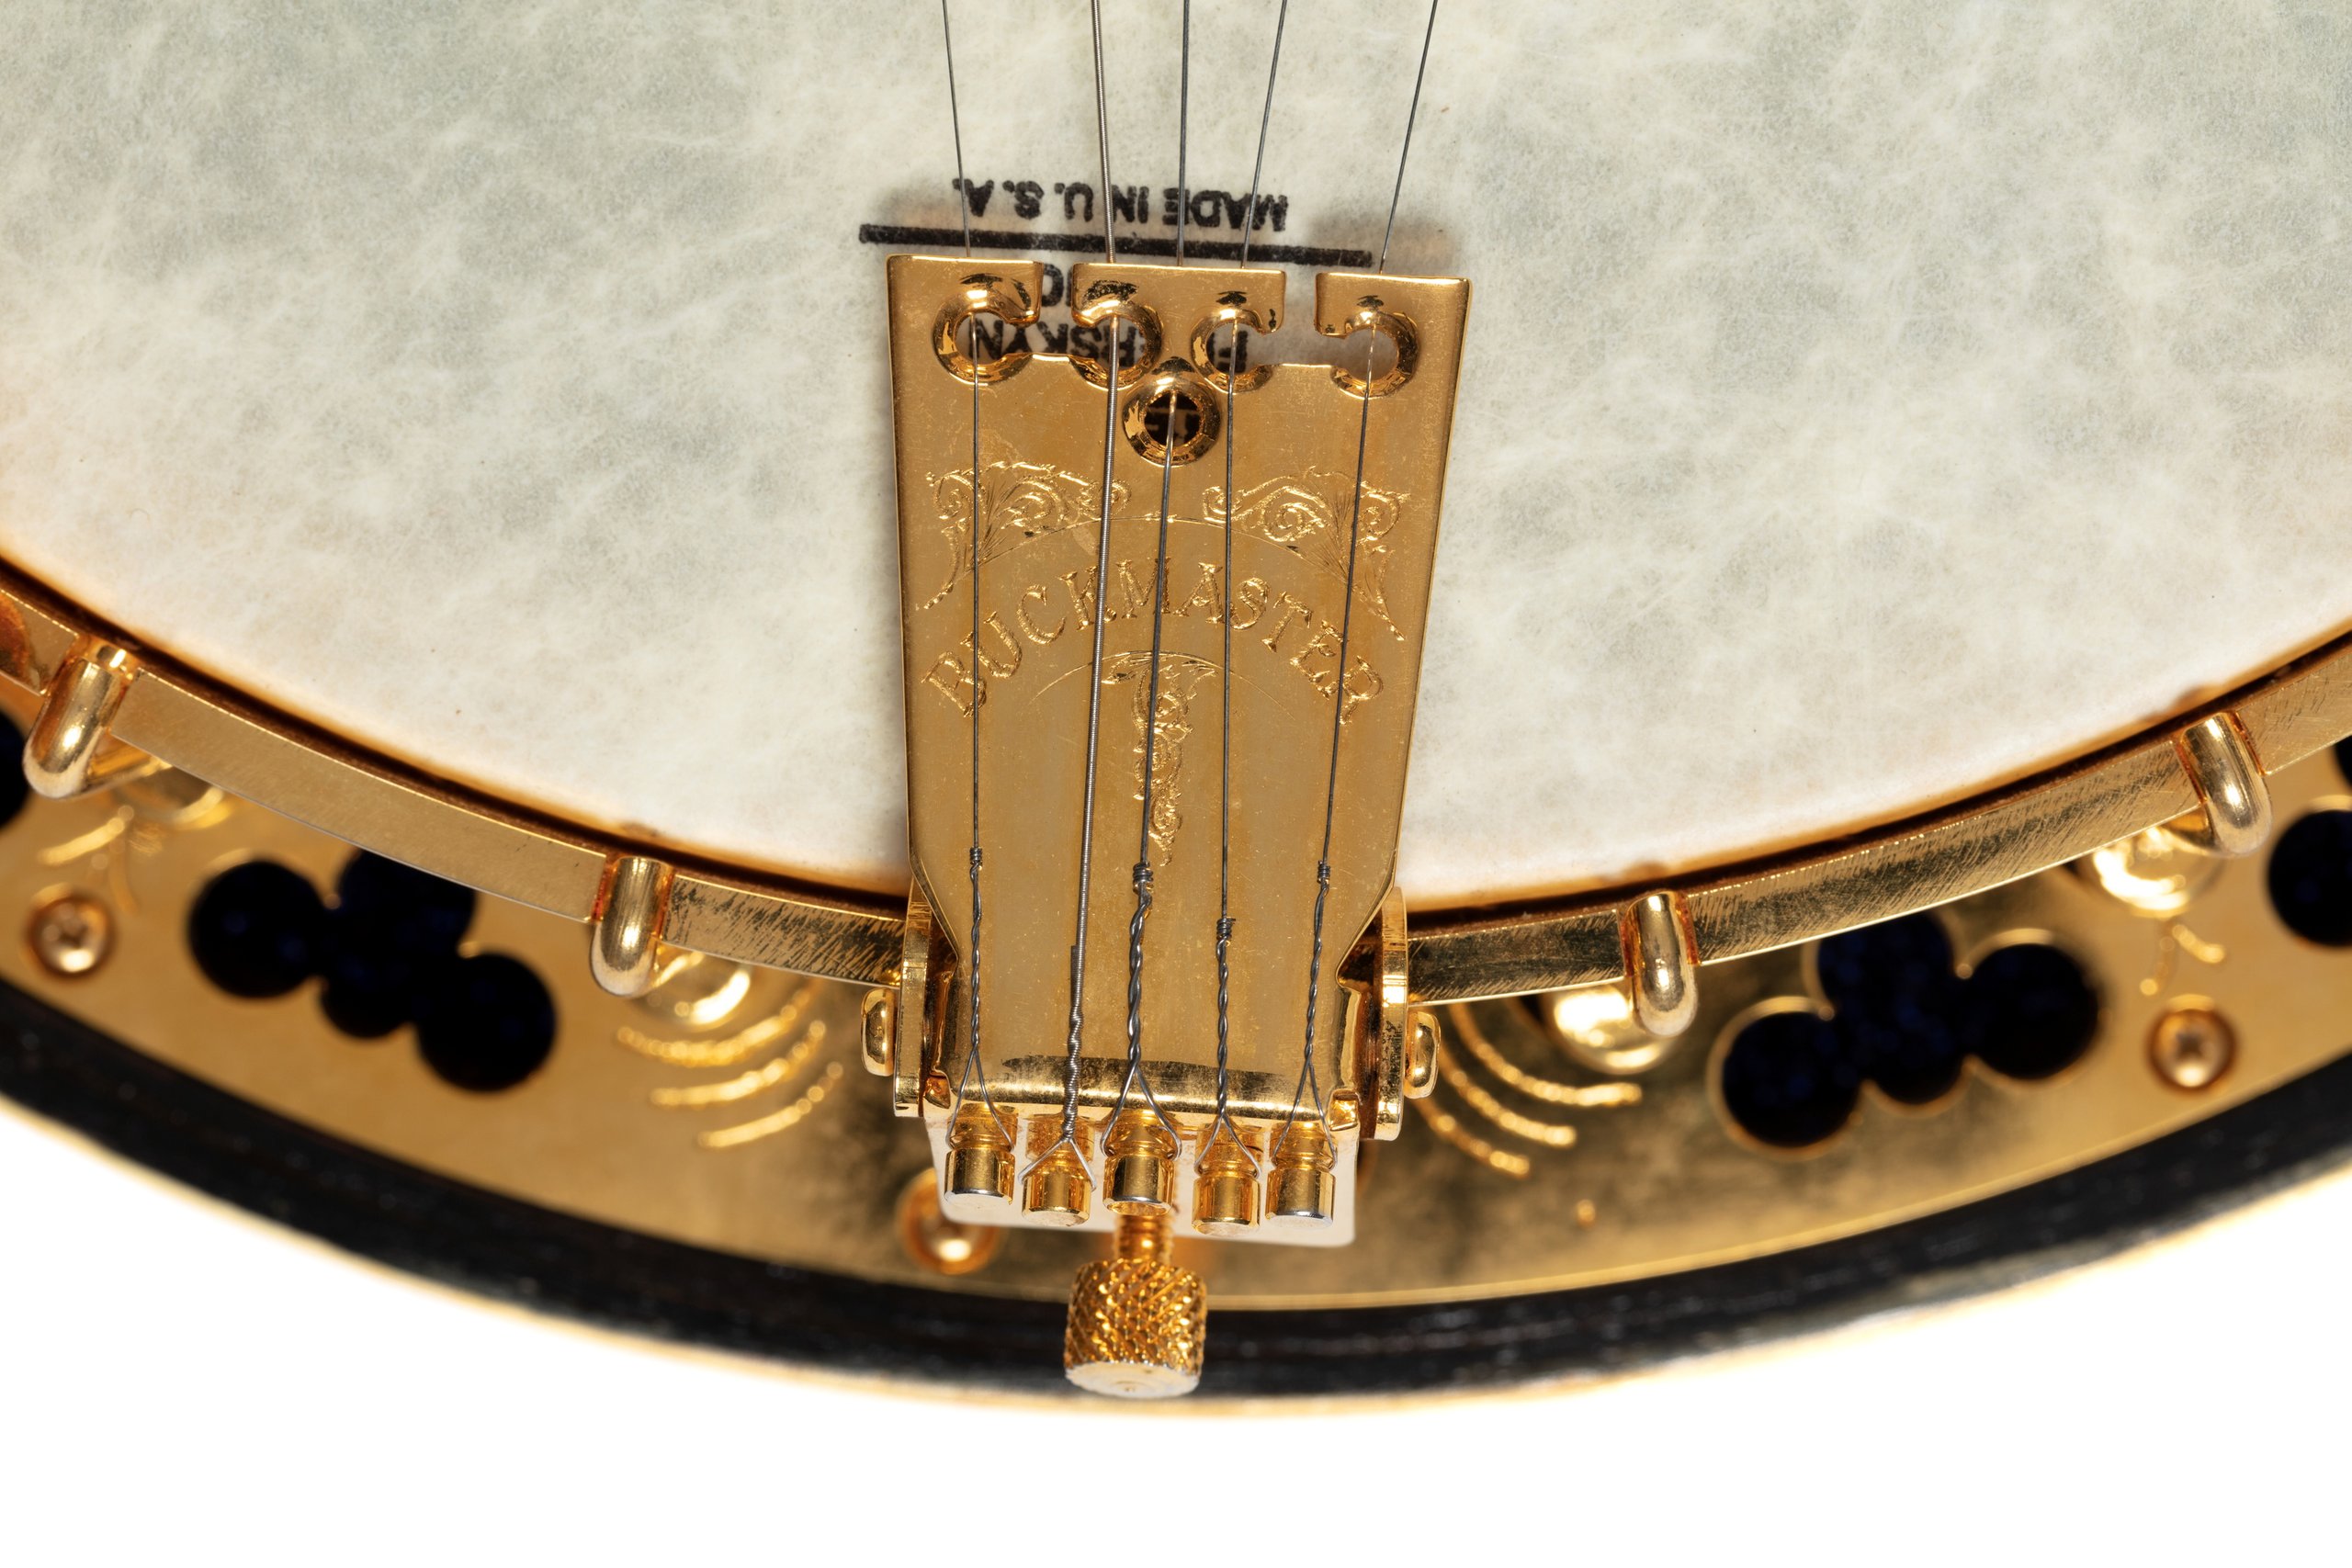 'Emperor Deluxe' five string banjo made by Roger Buckmaster